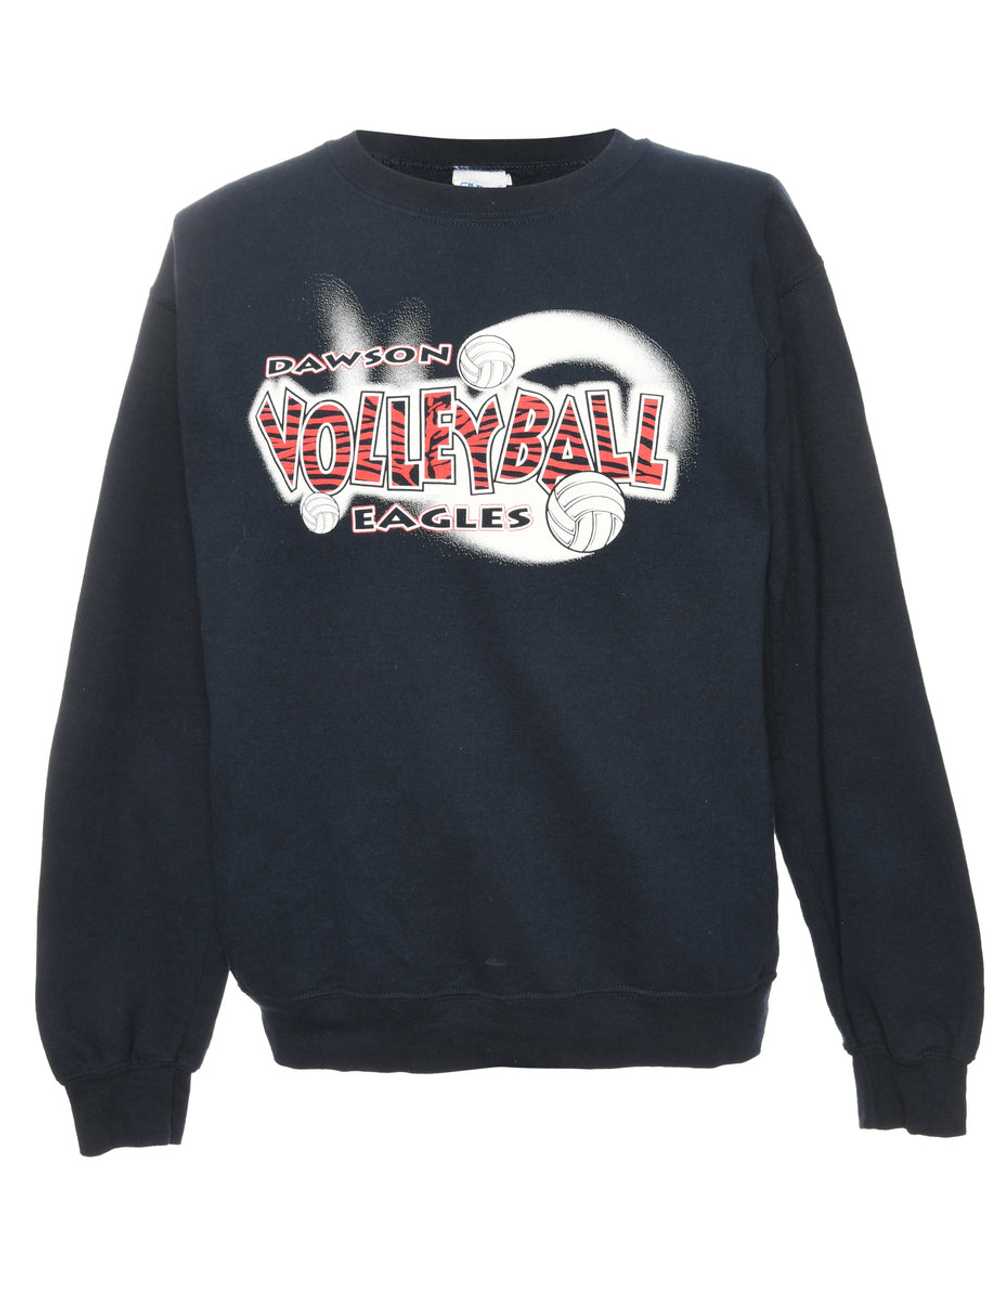 Dawson Volleyball Eagles Printed Sweatshirt - M - image 1